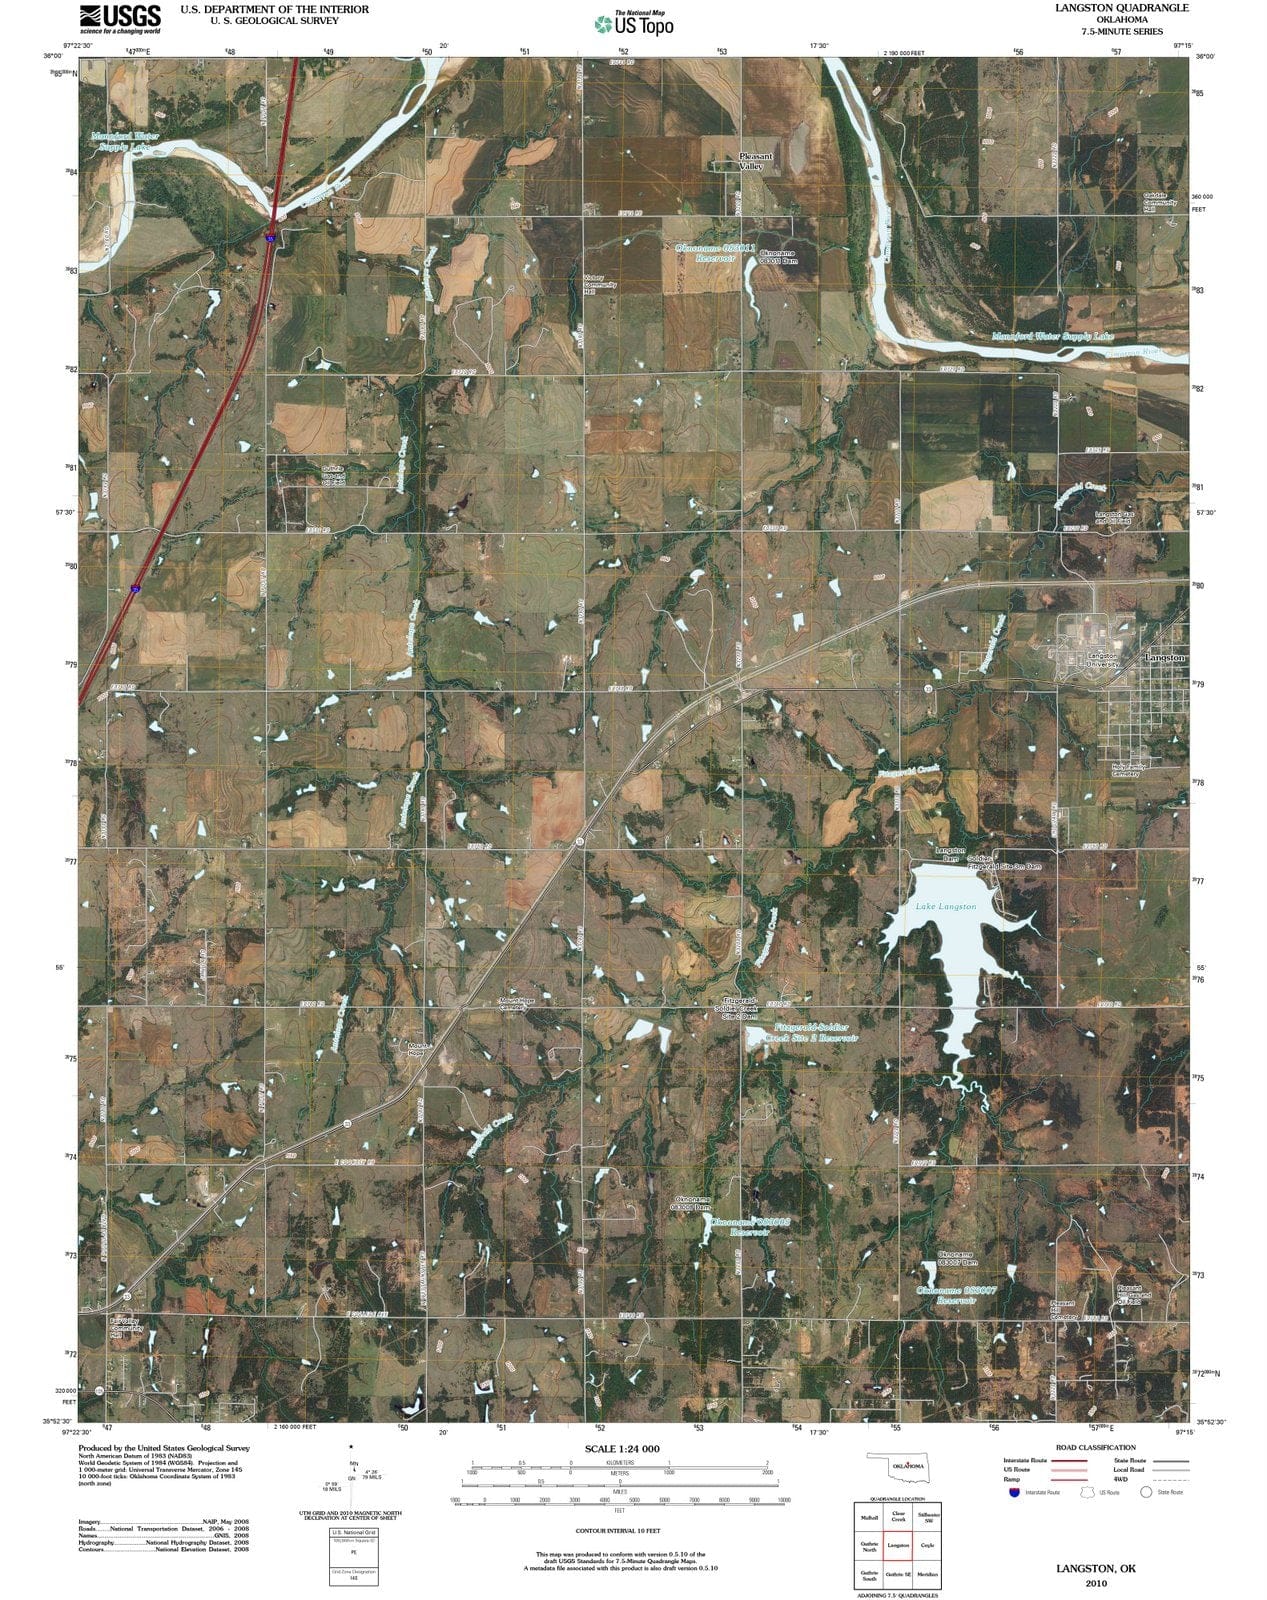 2010 Langston, OK - Oklahoma - USGS Topographic Map